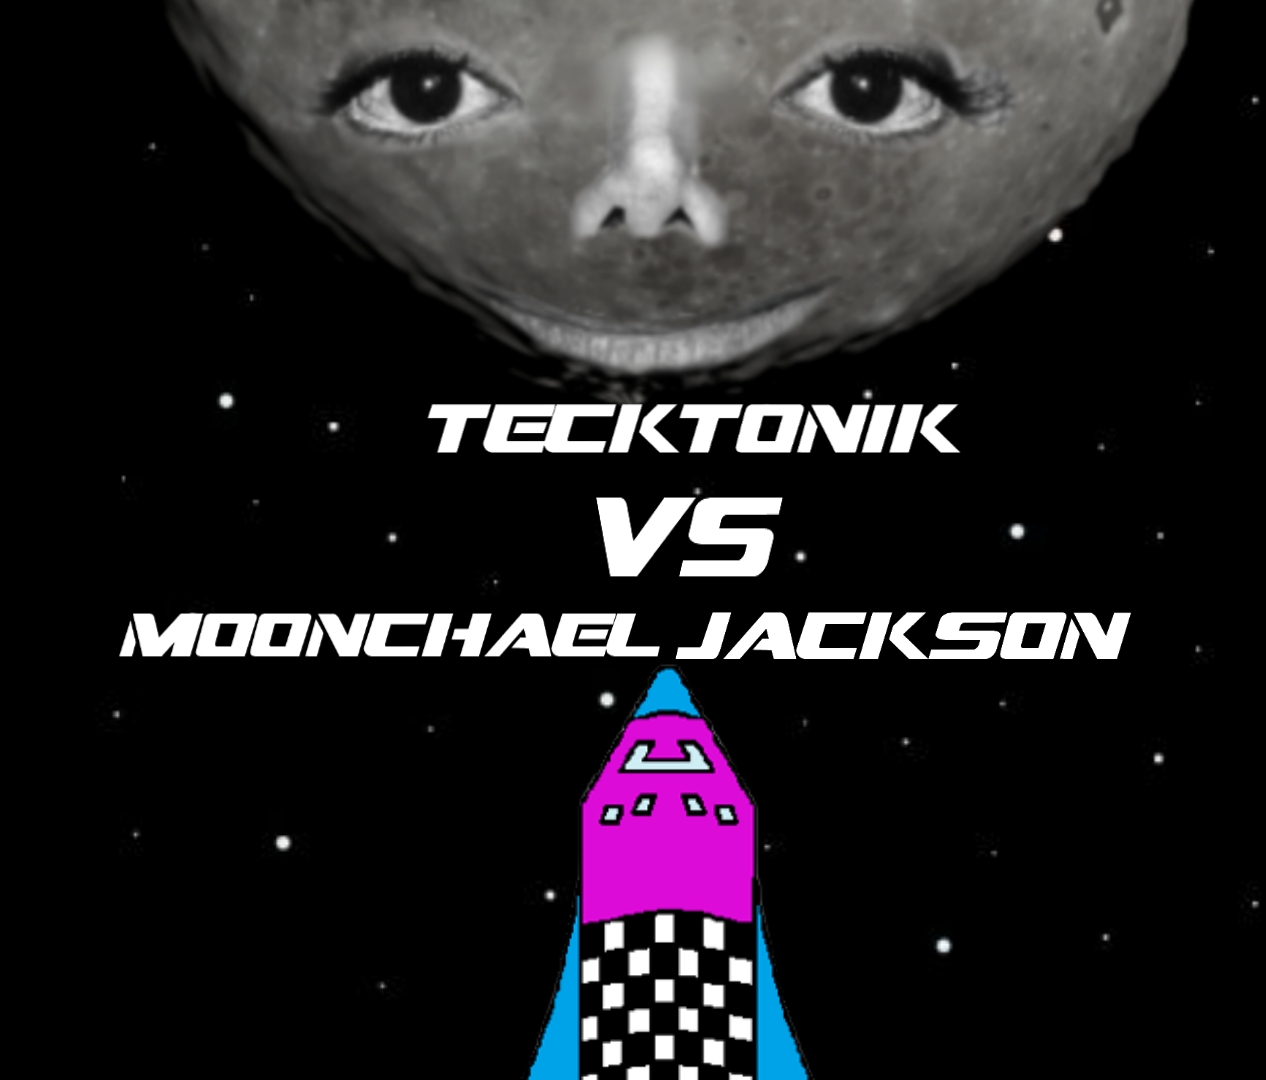 Tecktonik vs Mooncheal Jackson